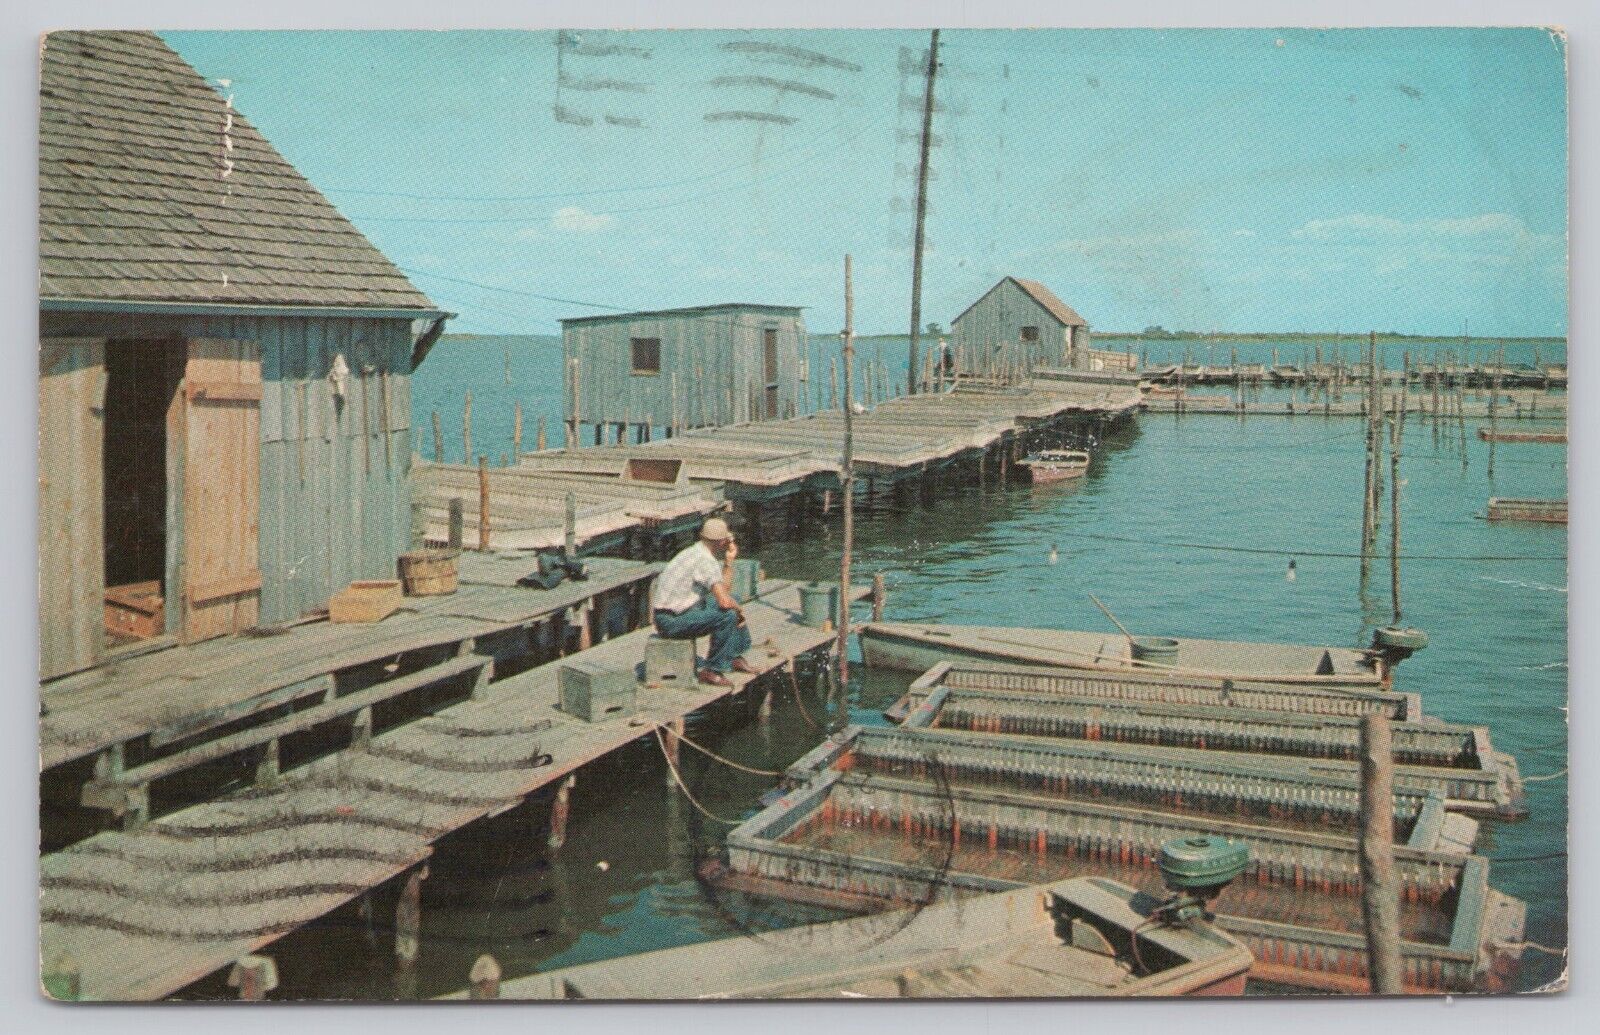 Chesapeake Bay Maryland, Crab Floats & Fishing Shanty Cabins, Vintage Postcard